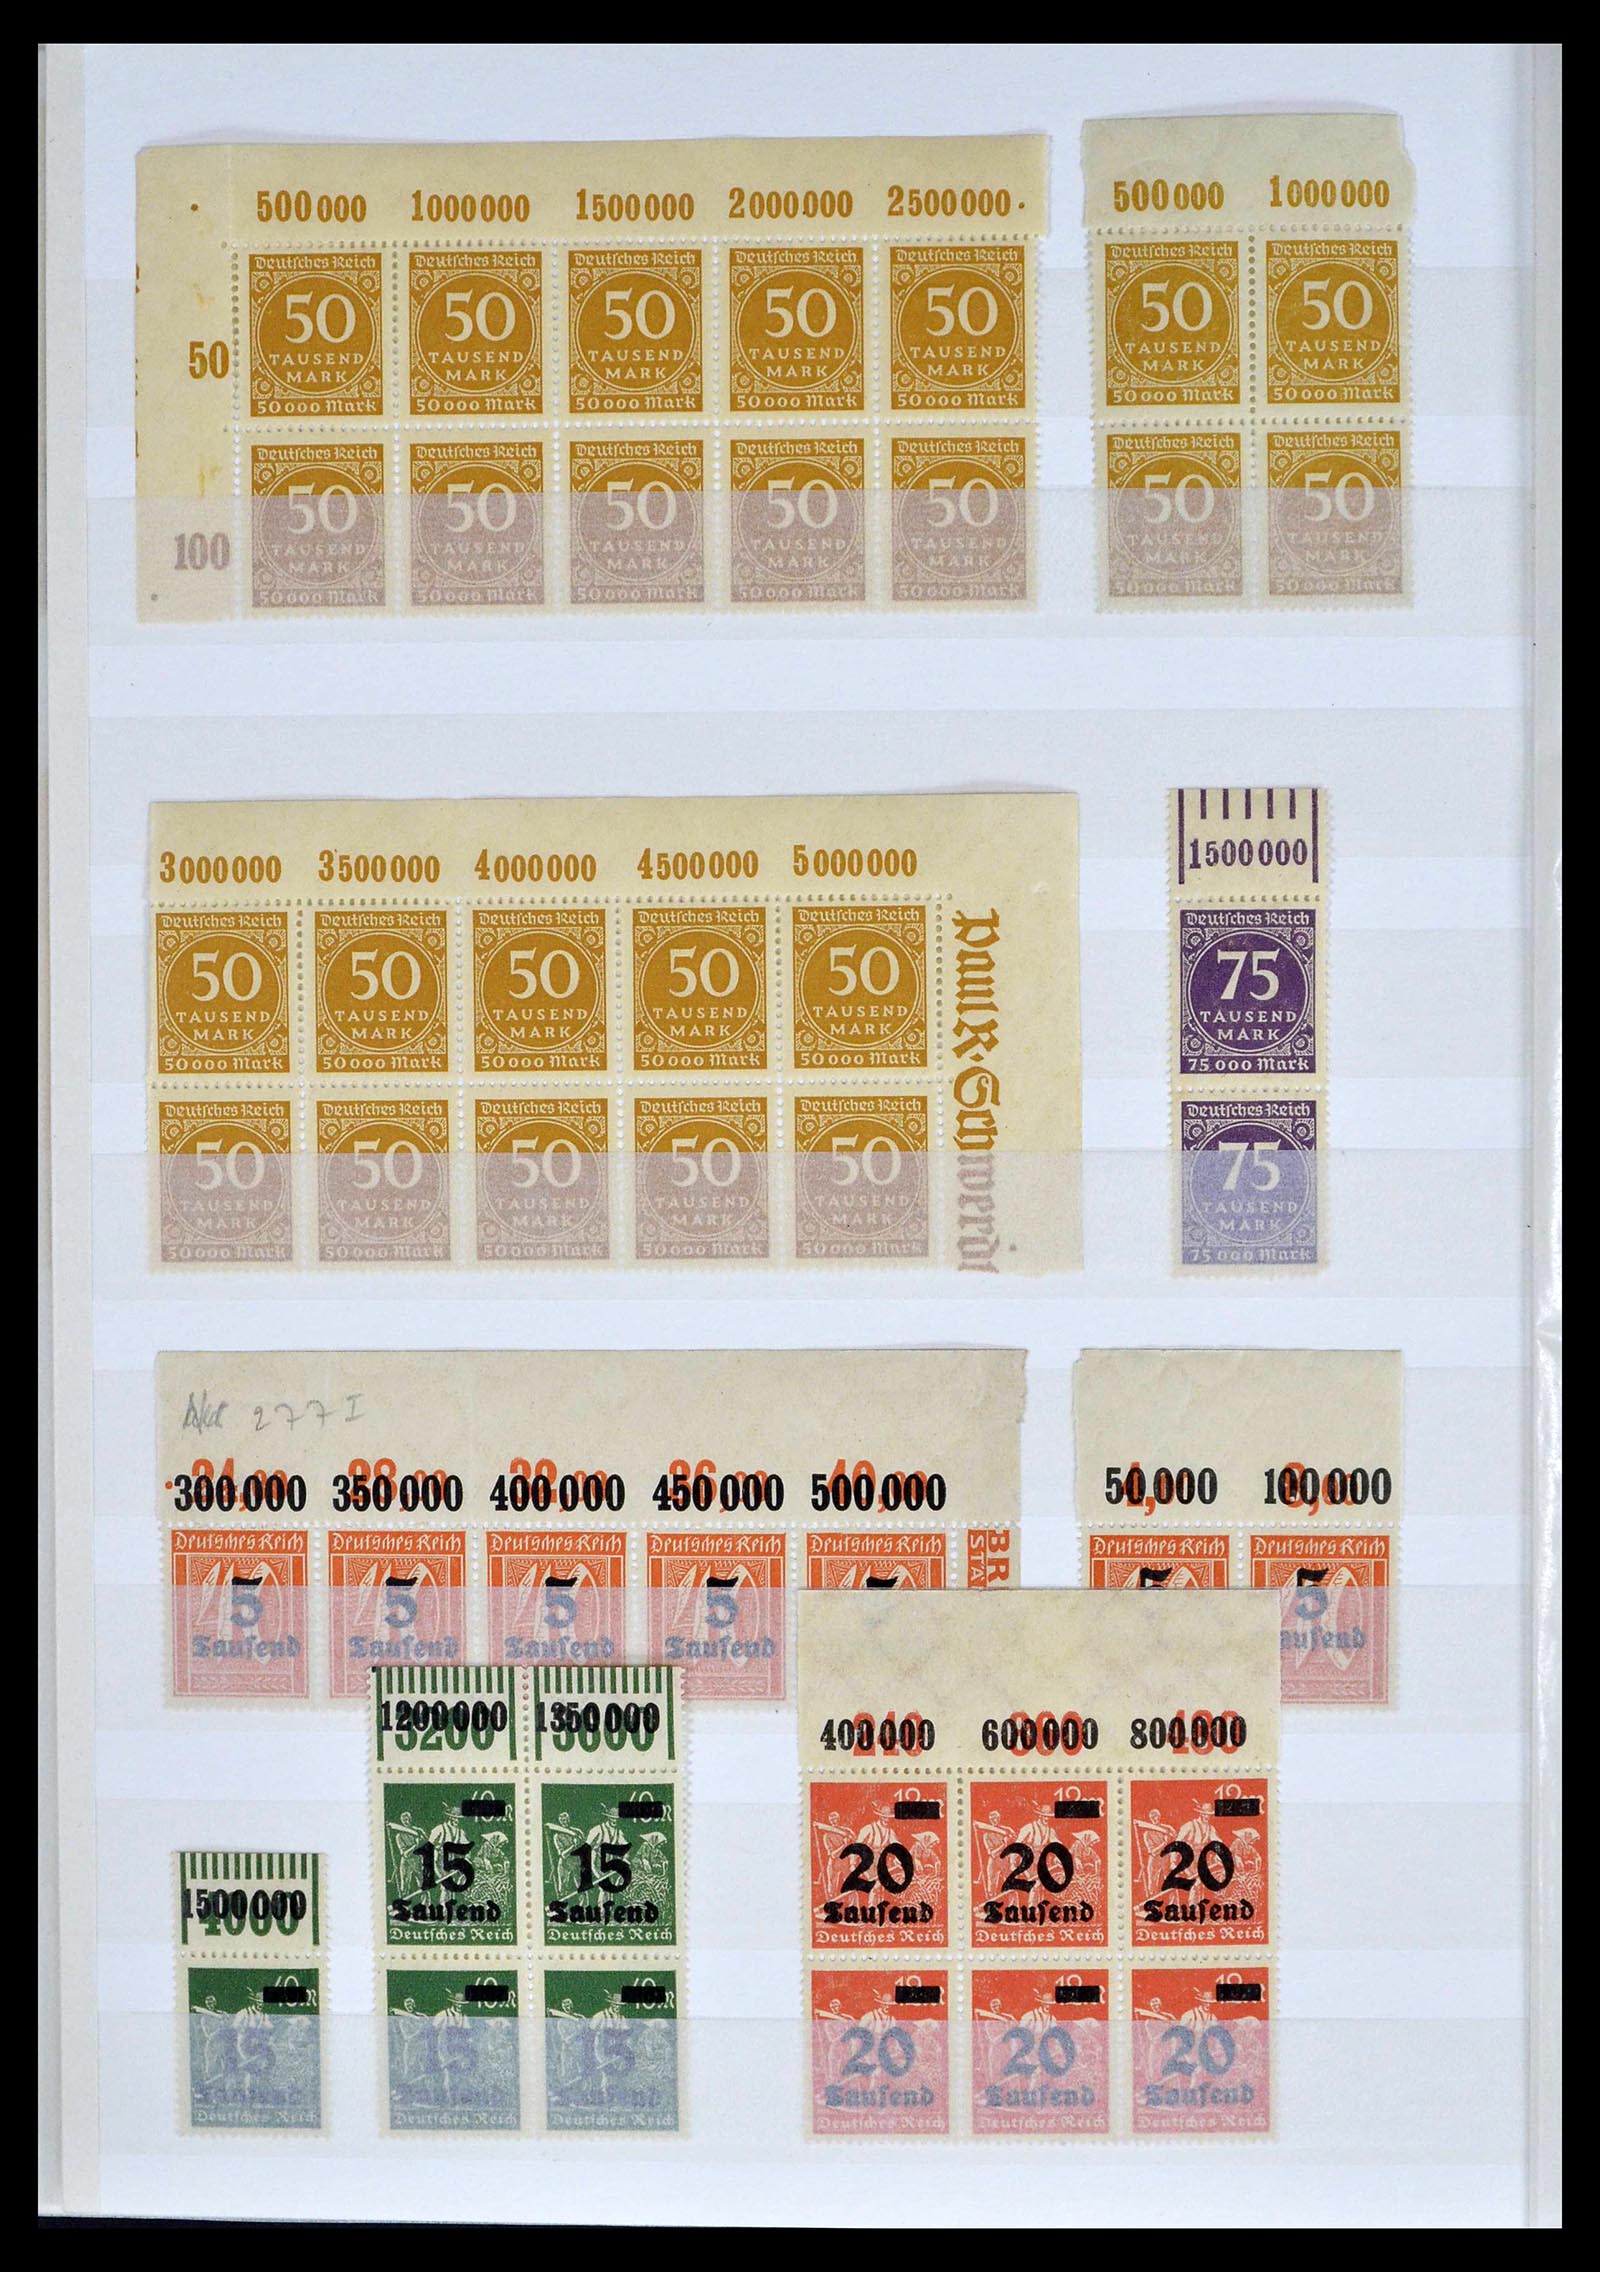 39254 0044 - Stamp collection 39254 German Reich MNH top margins.